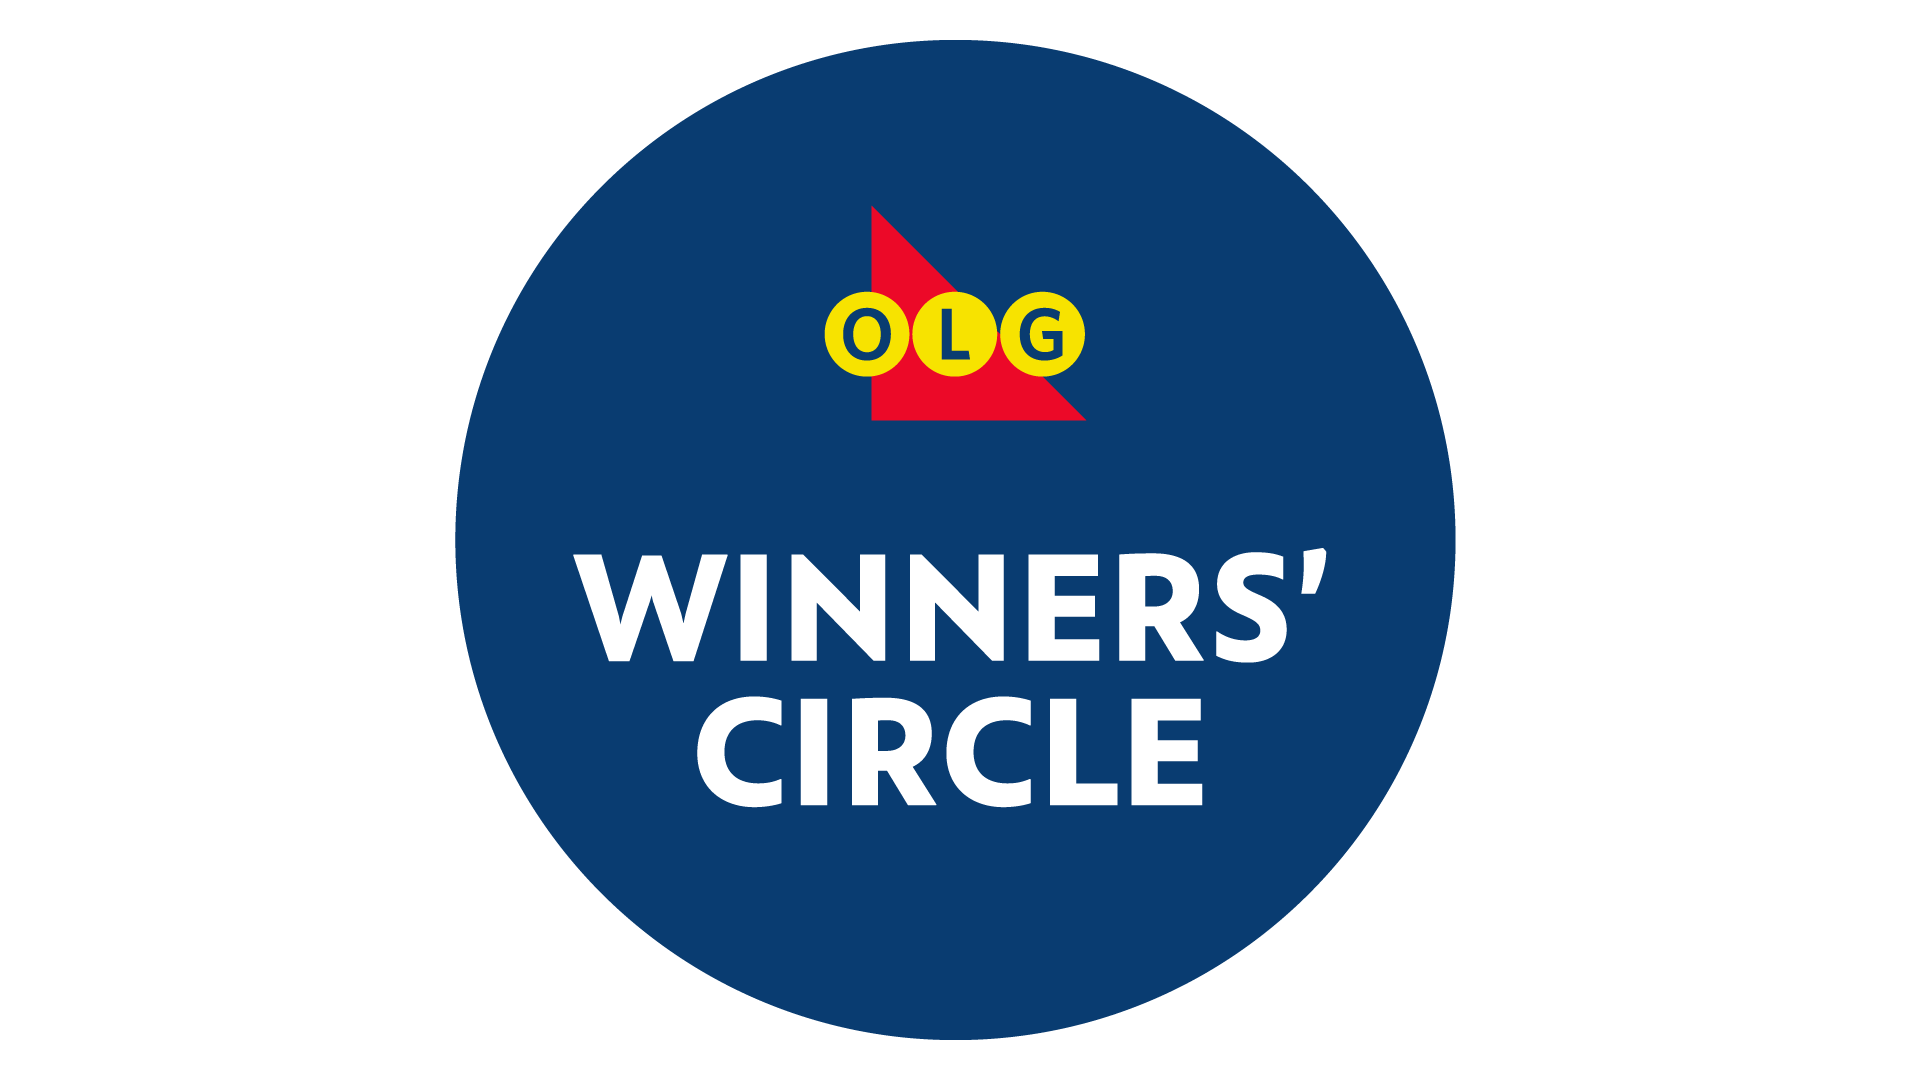 Olg Winners Circle